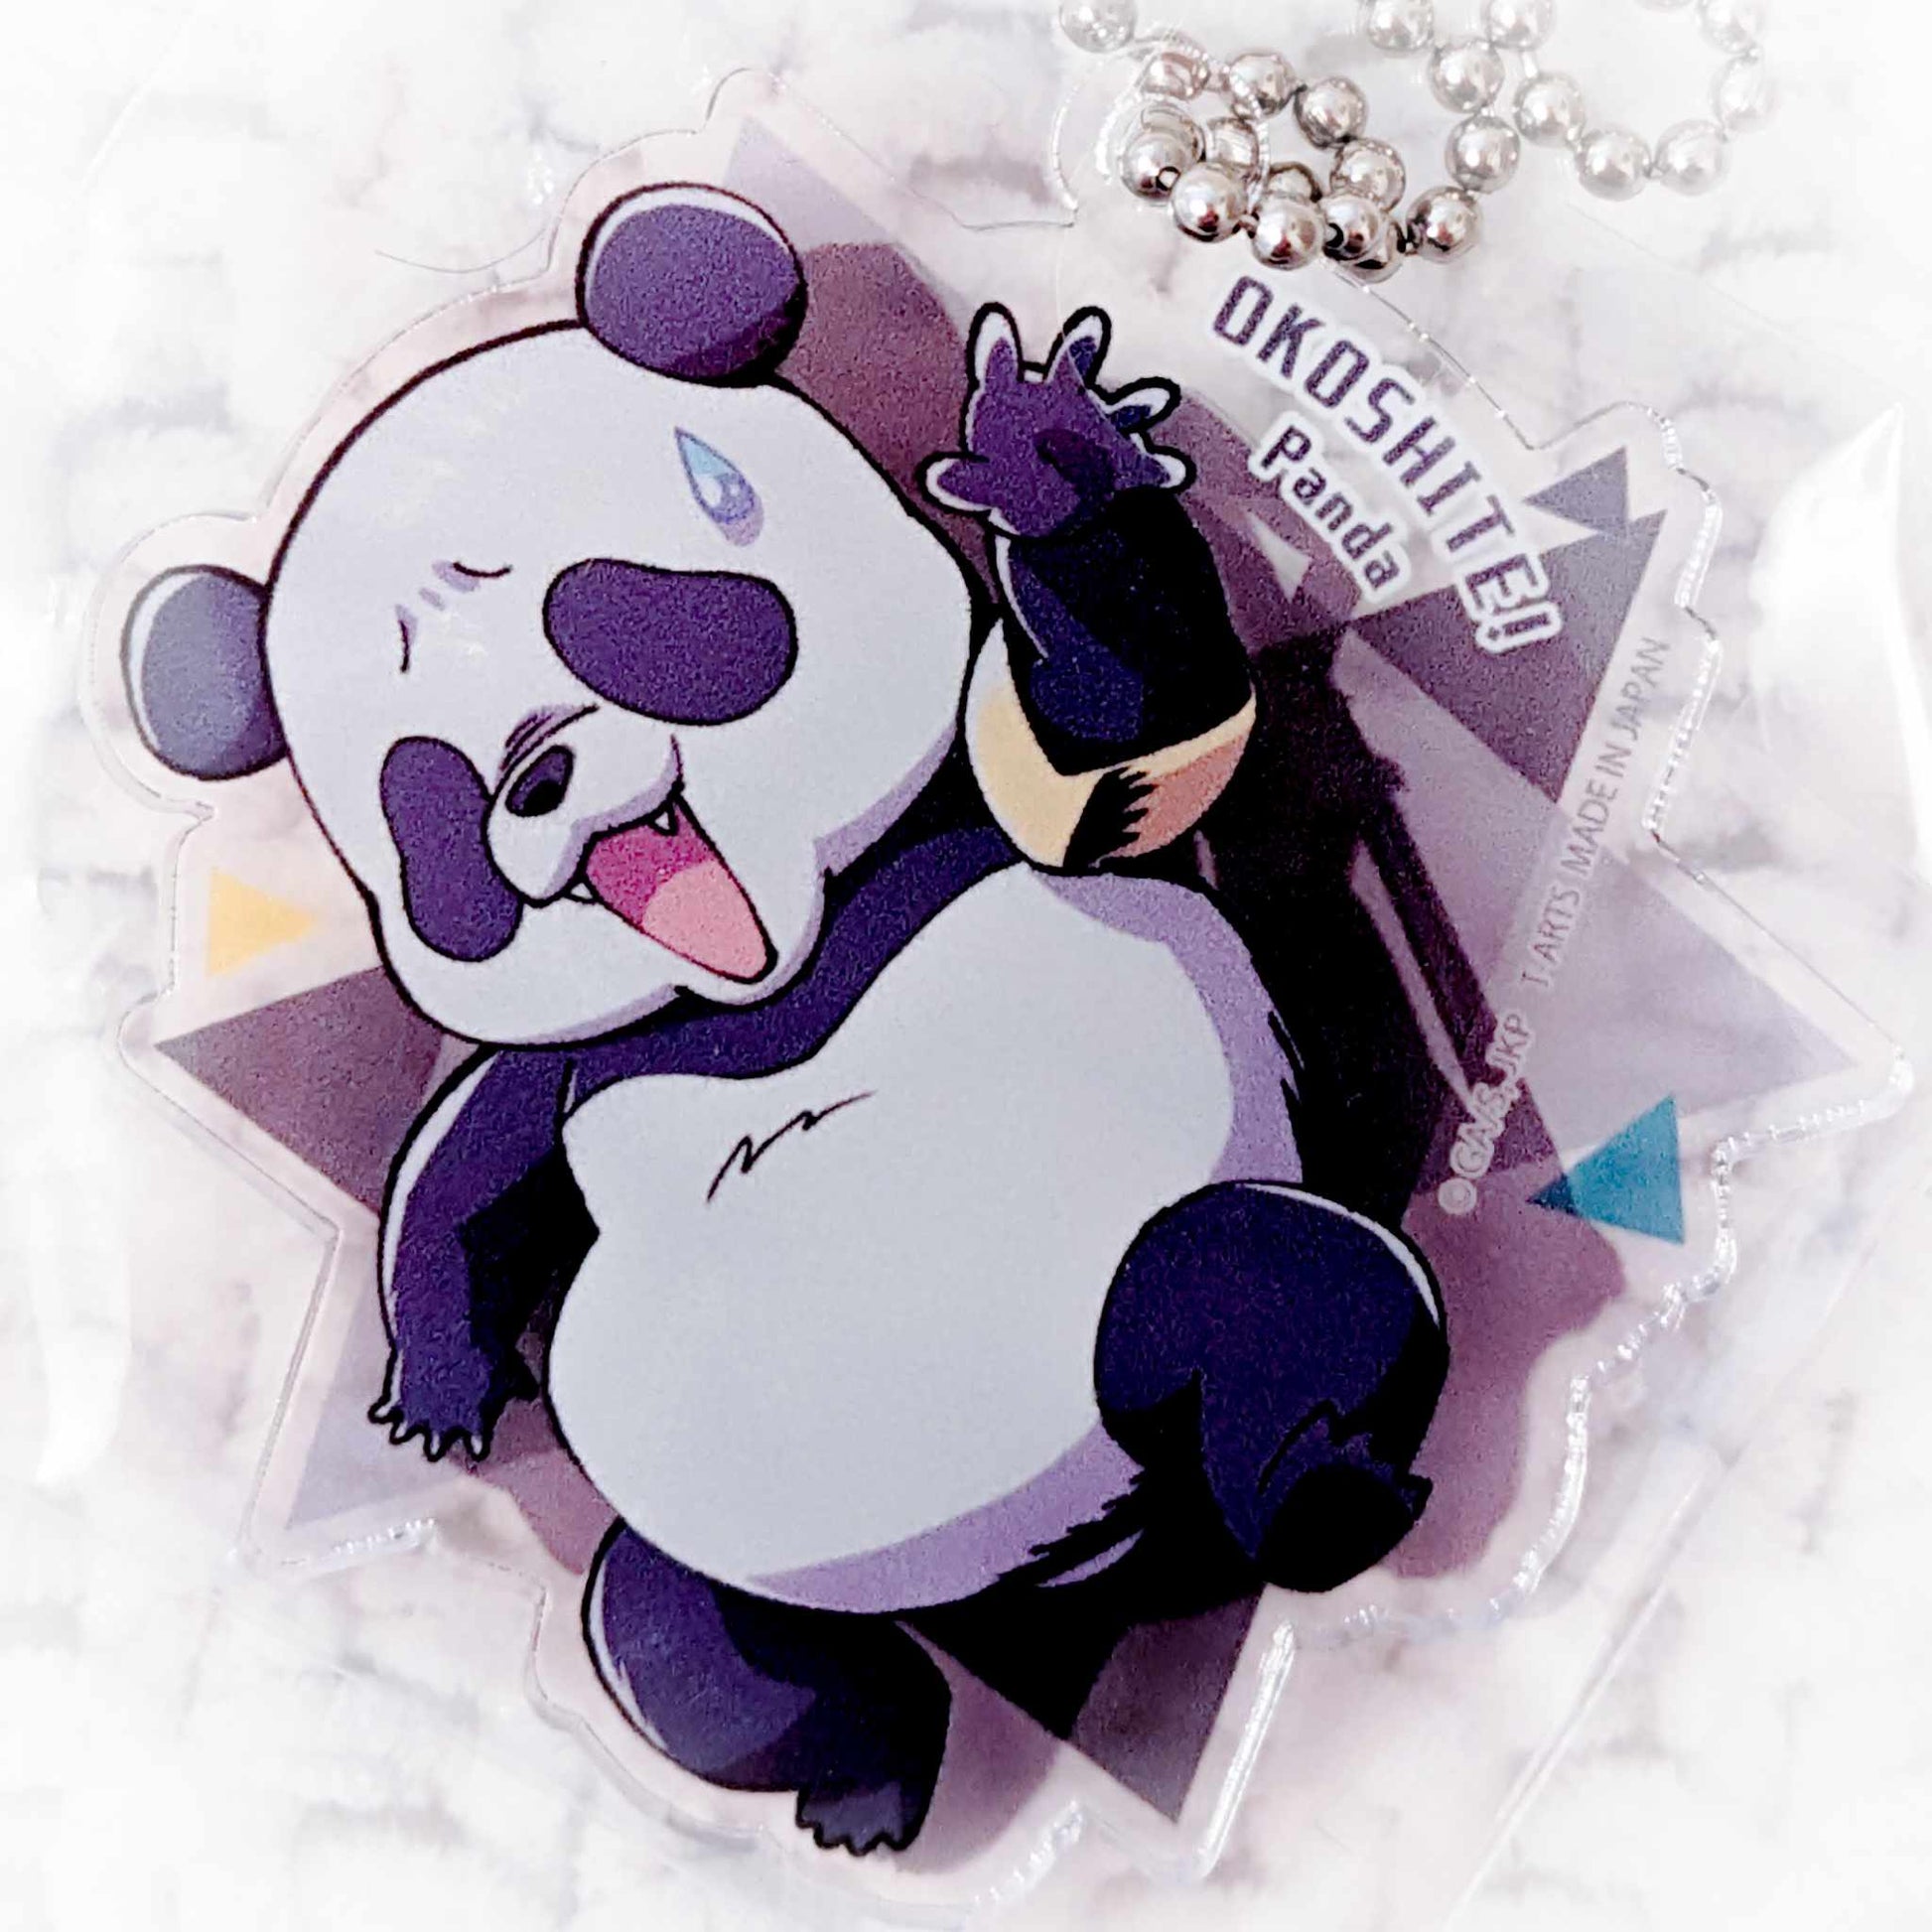 Cartoon Panda Images, HD Pictures For Free Vectors Download - Lovepik.com